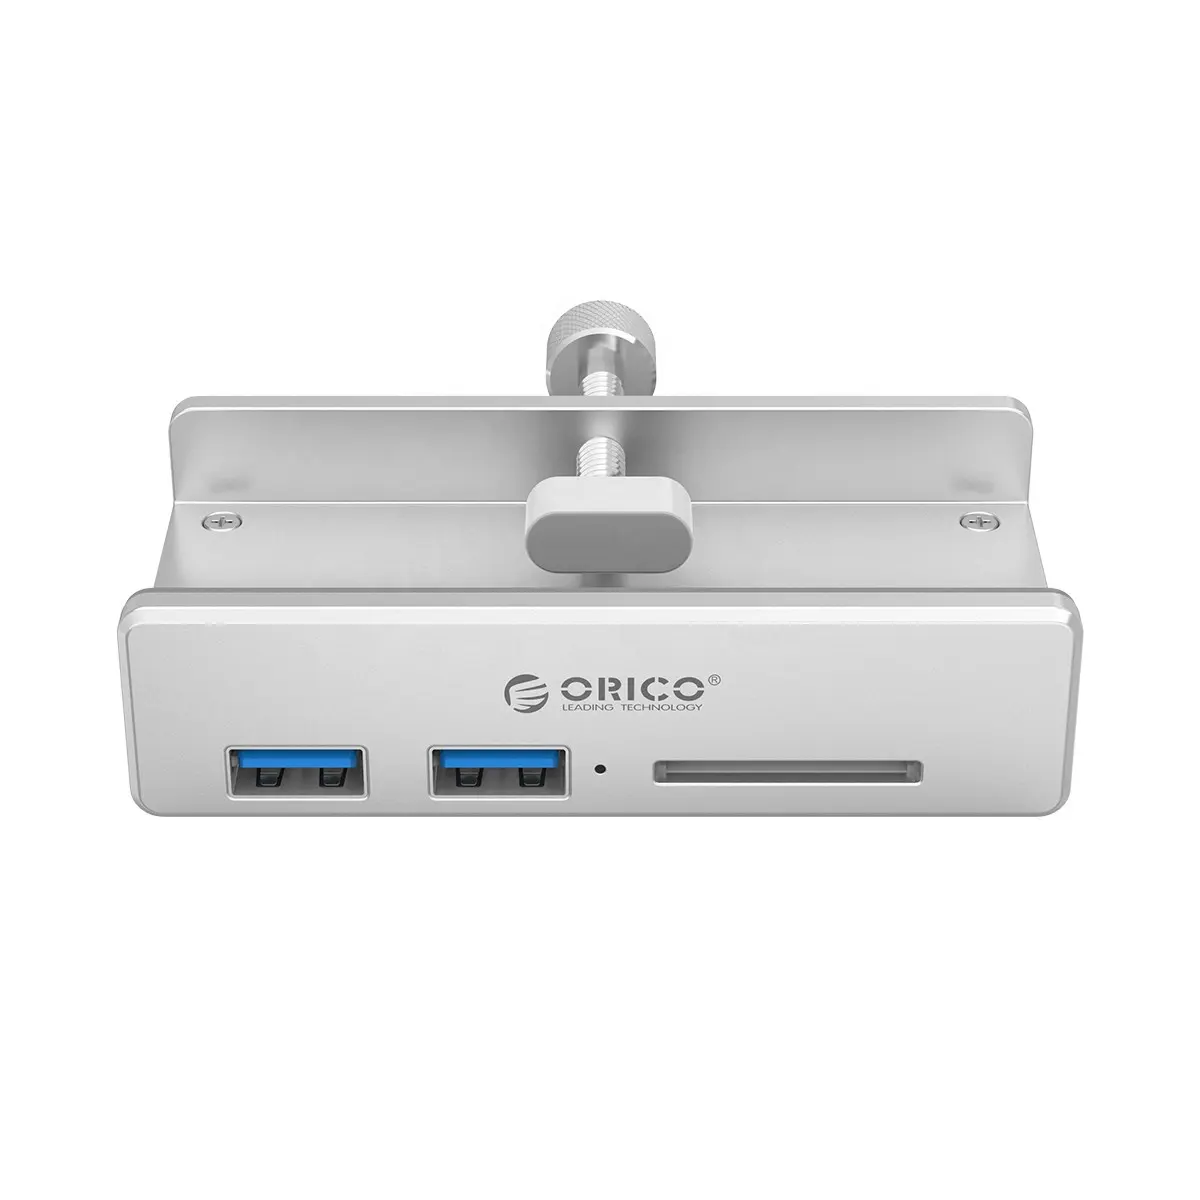 ORICO 5 gbps alüminyum alaşım klip tipi 2 Port USB 3.0 HUB ile USB kart okuyucu